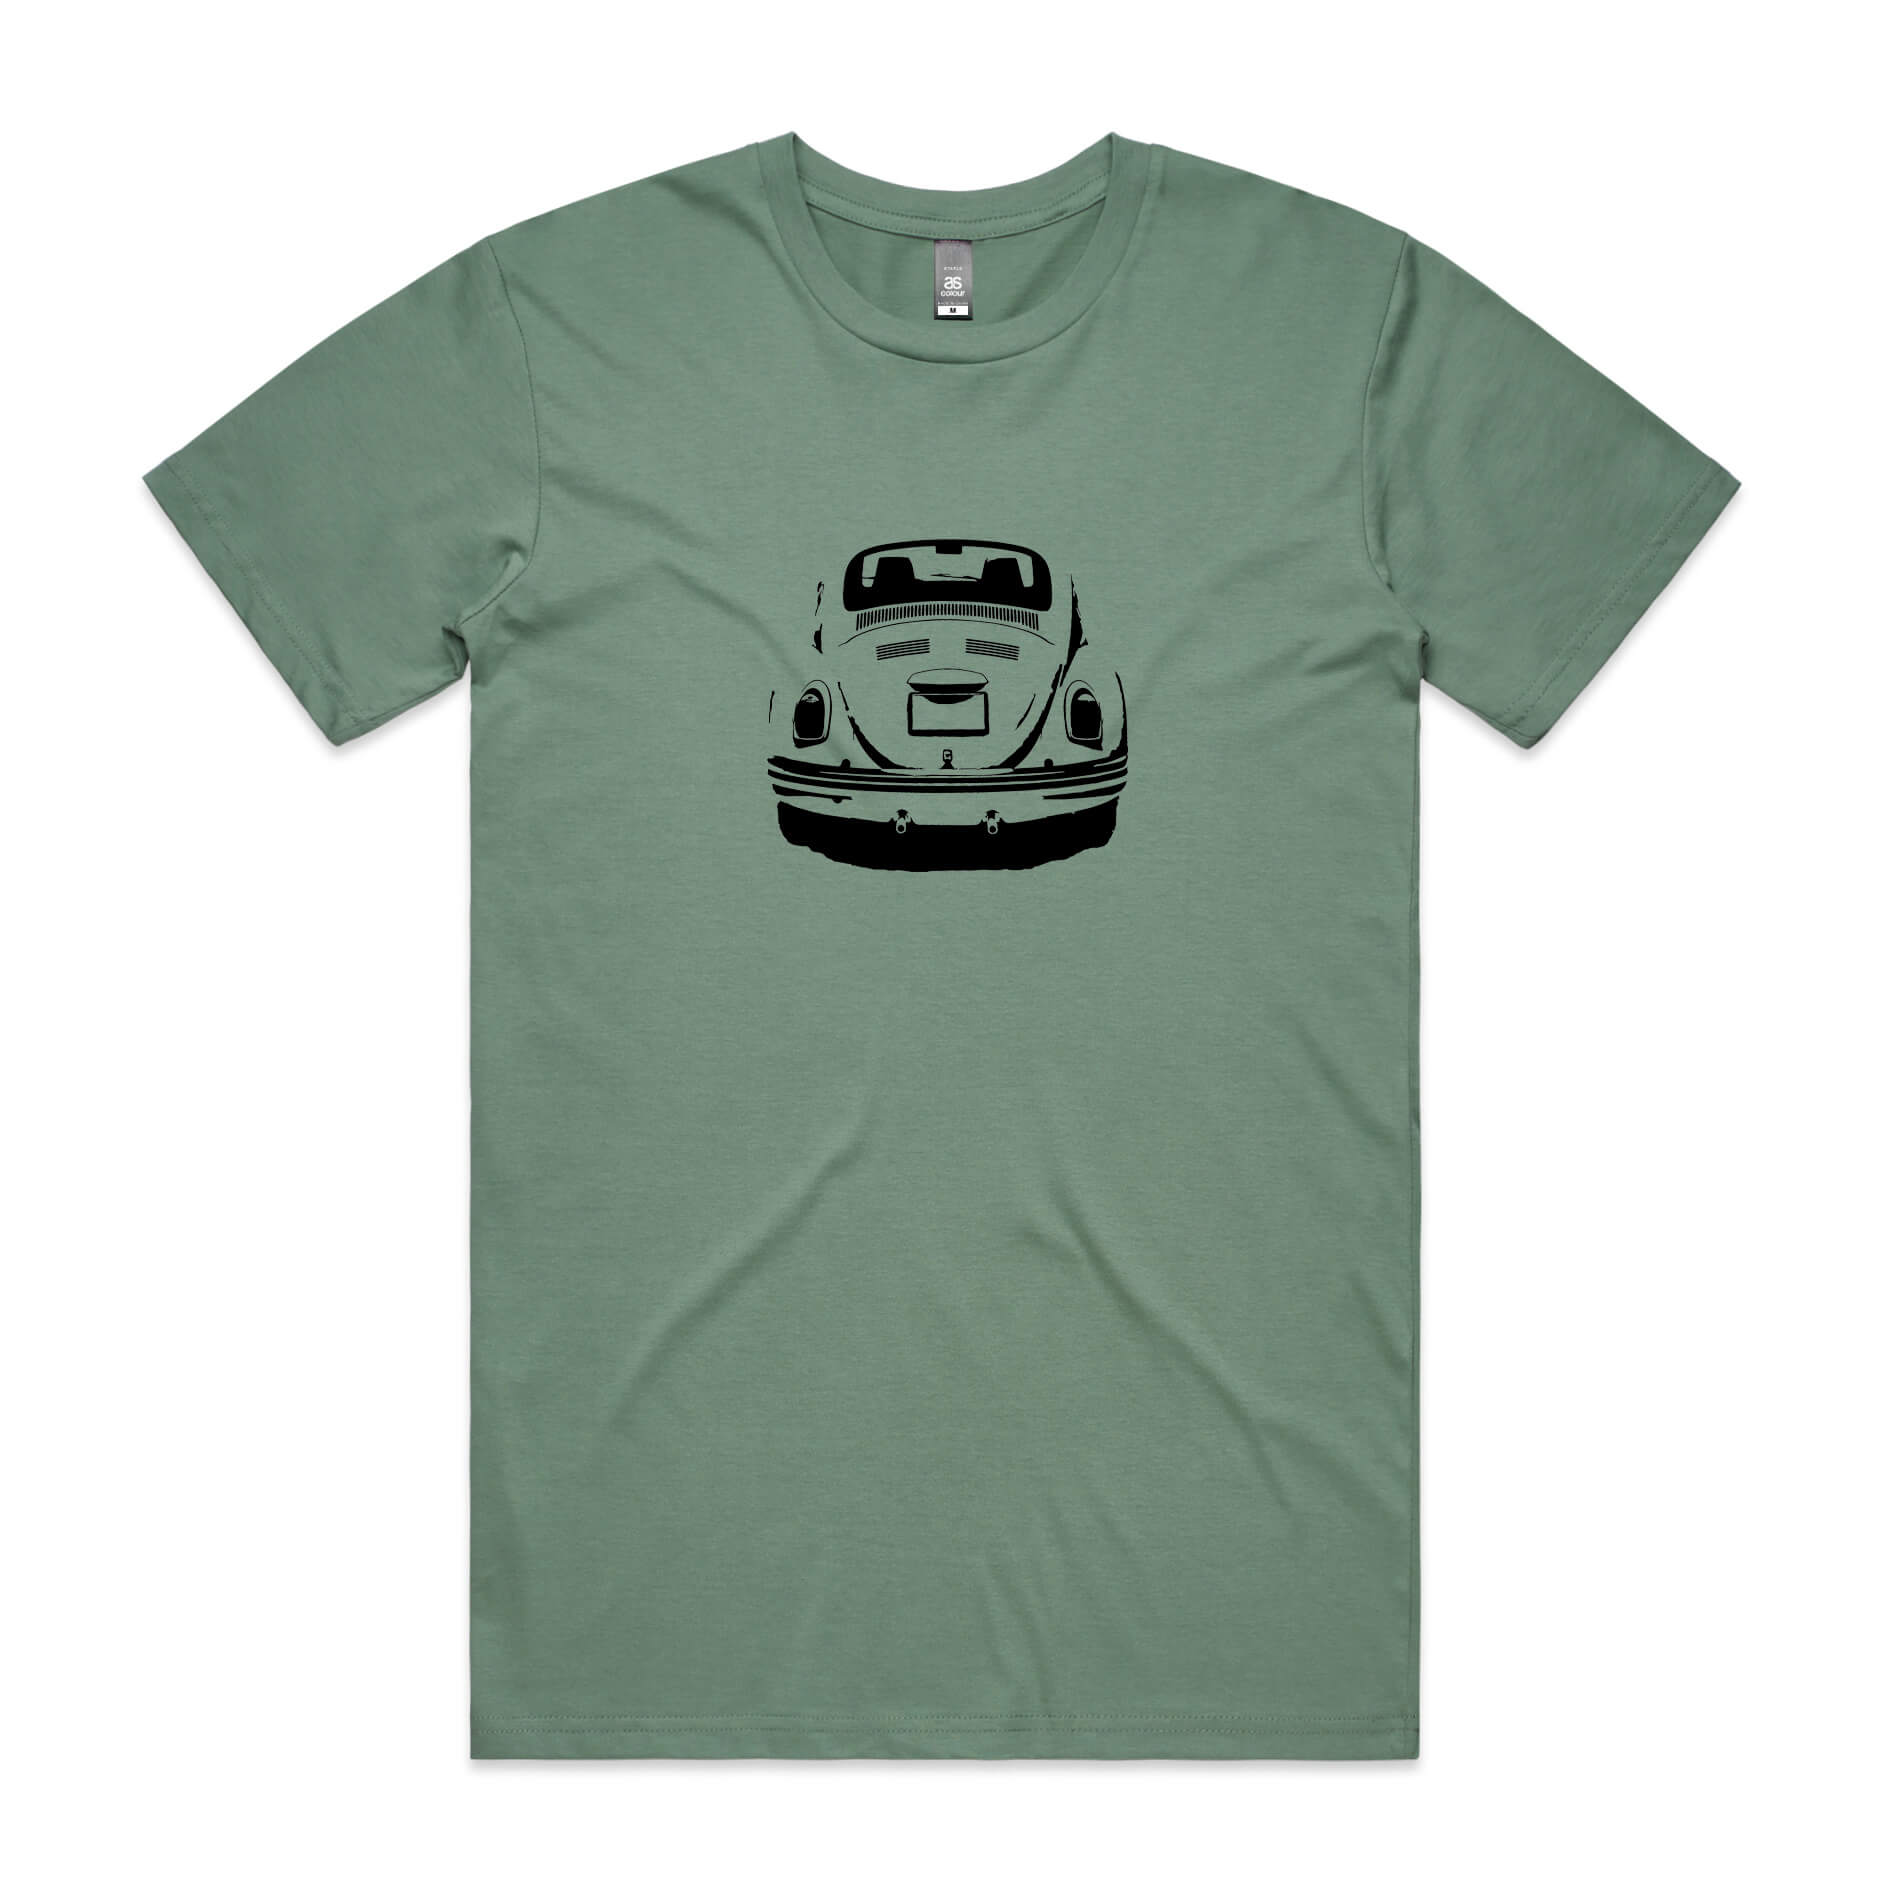 VW Beetle t-shirt in sage green